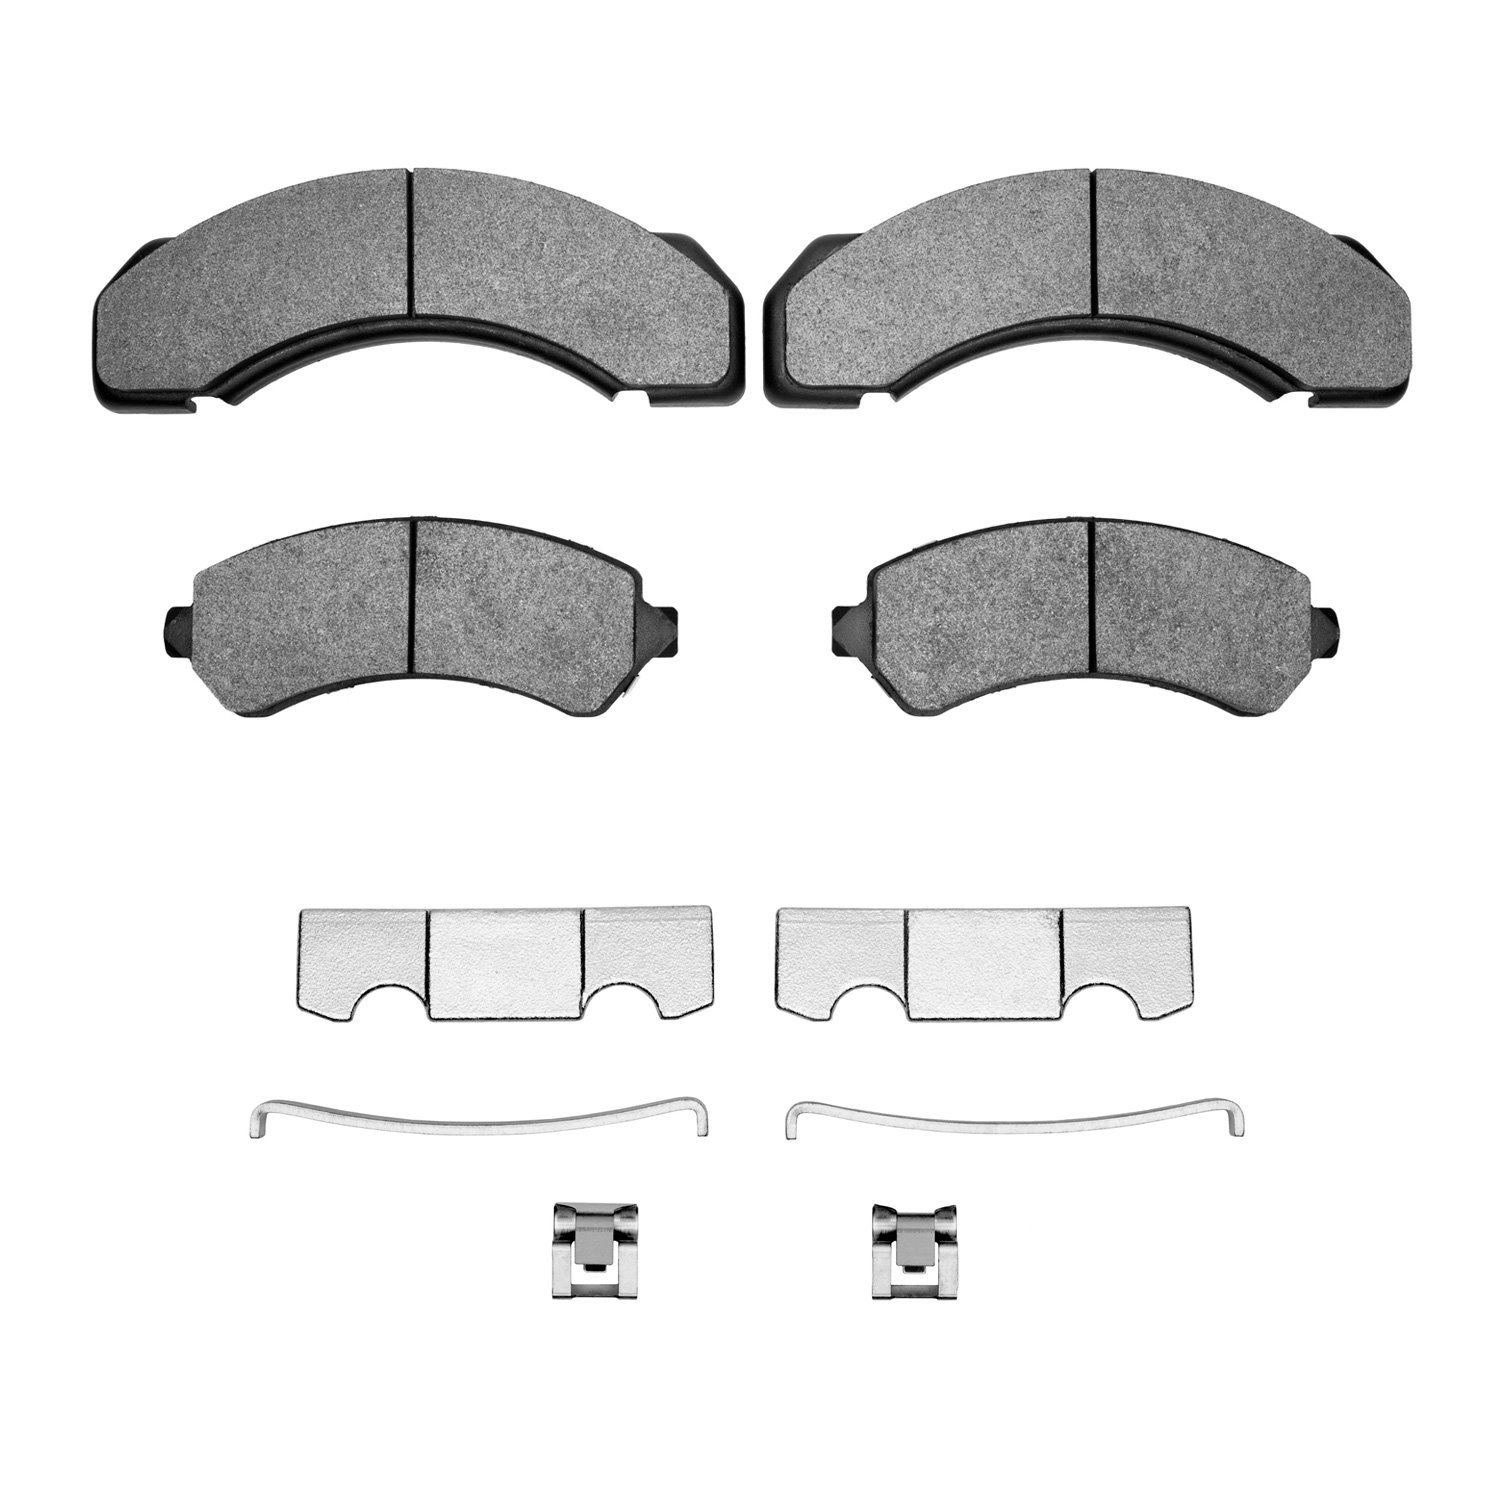 1214-0717-03 Heavy-Duty Brake Pads & Hardware Kit, 1973-2012 Multiple Makes/Models, Position: Rr,Rear,Front,Fr,Fr & Rr